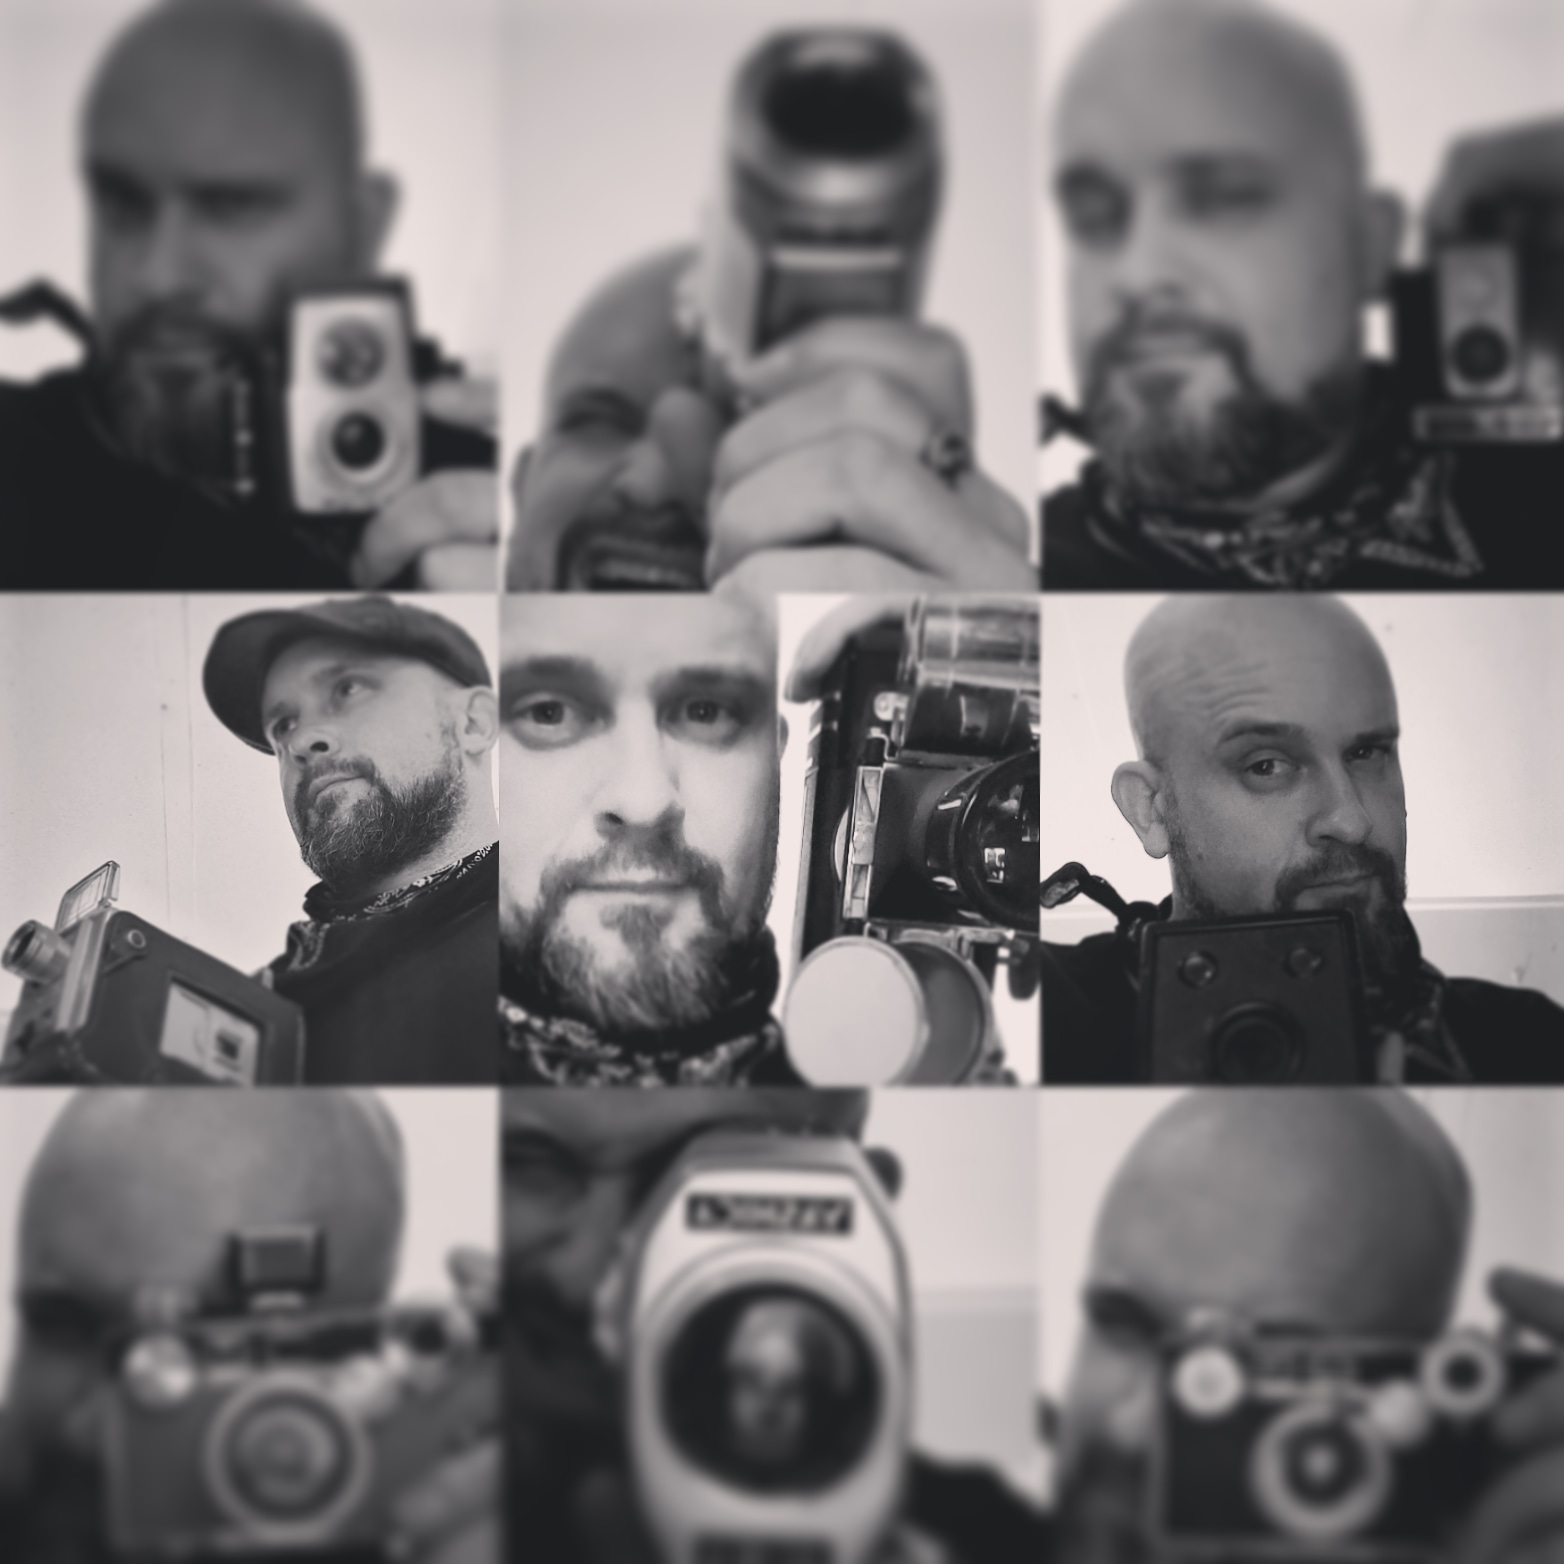 Garrett and his vintage cameras